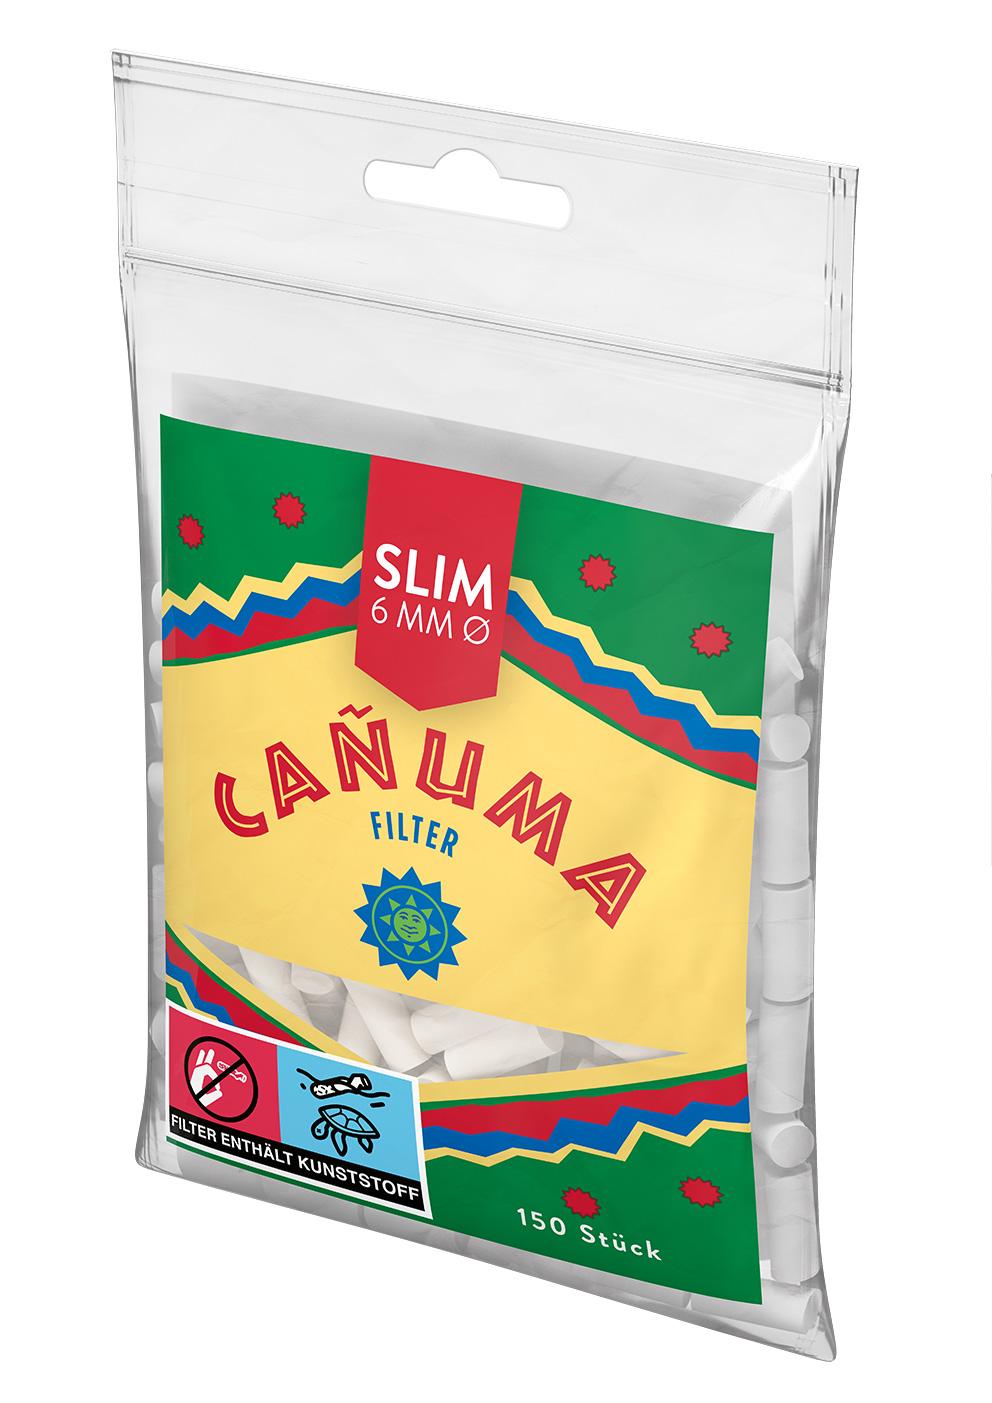 Canuma Filter Tips 6mm 1 Packung